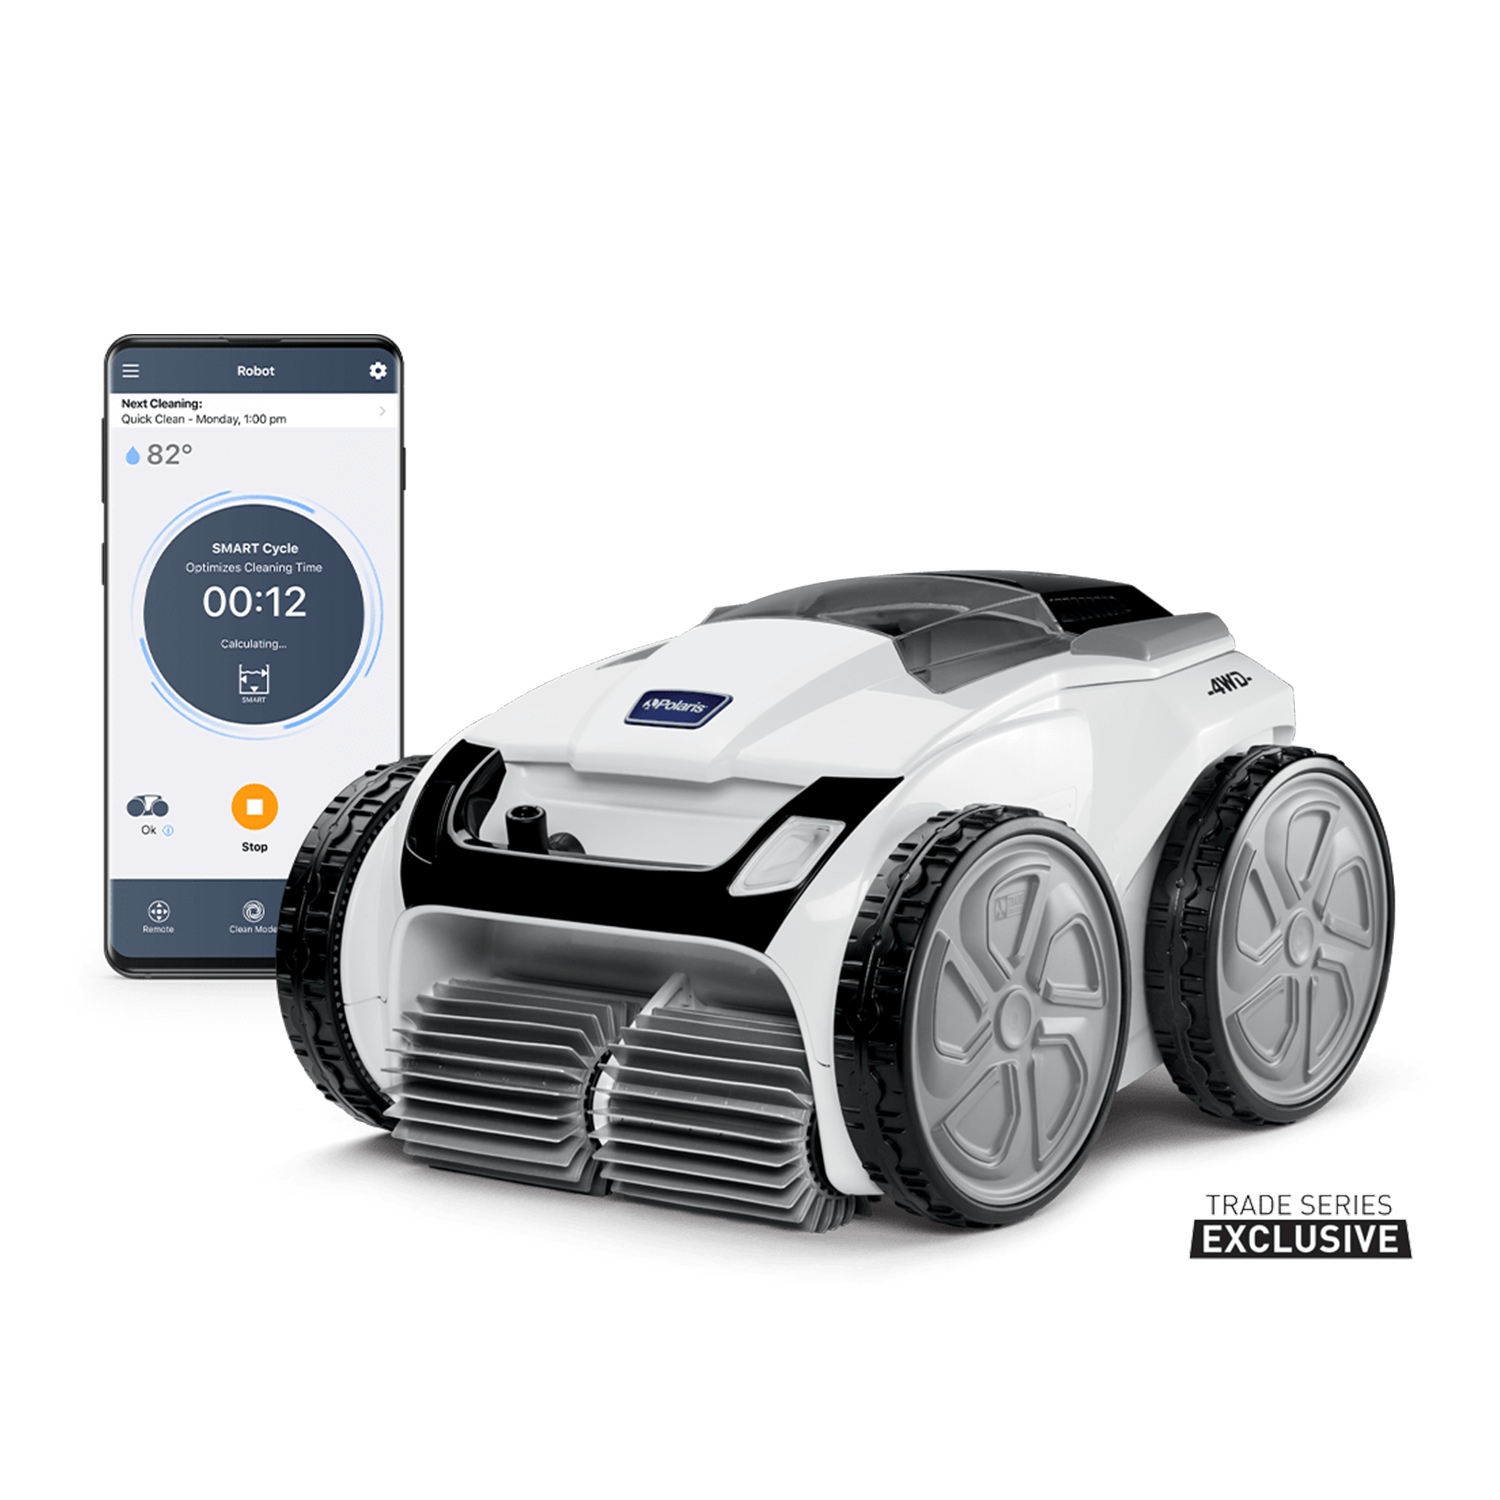 Polaris VRX iQ+ Product Image with Phone